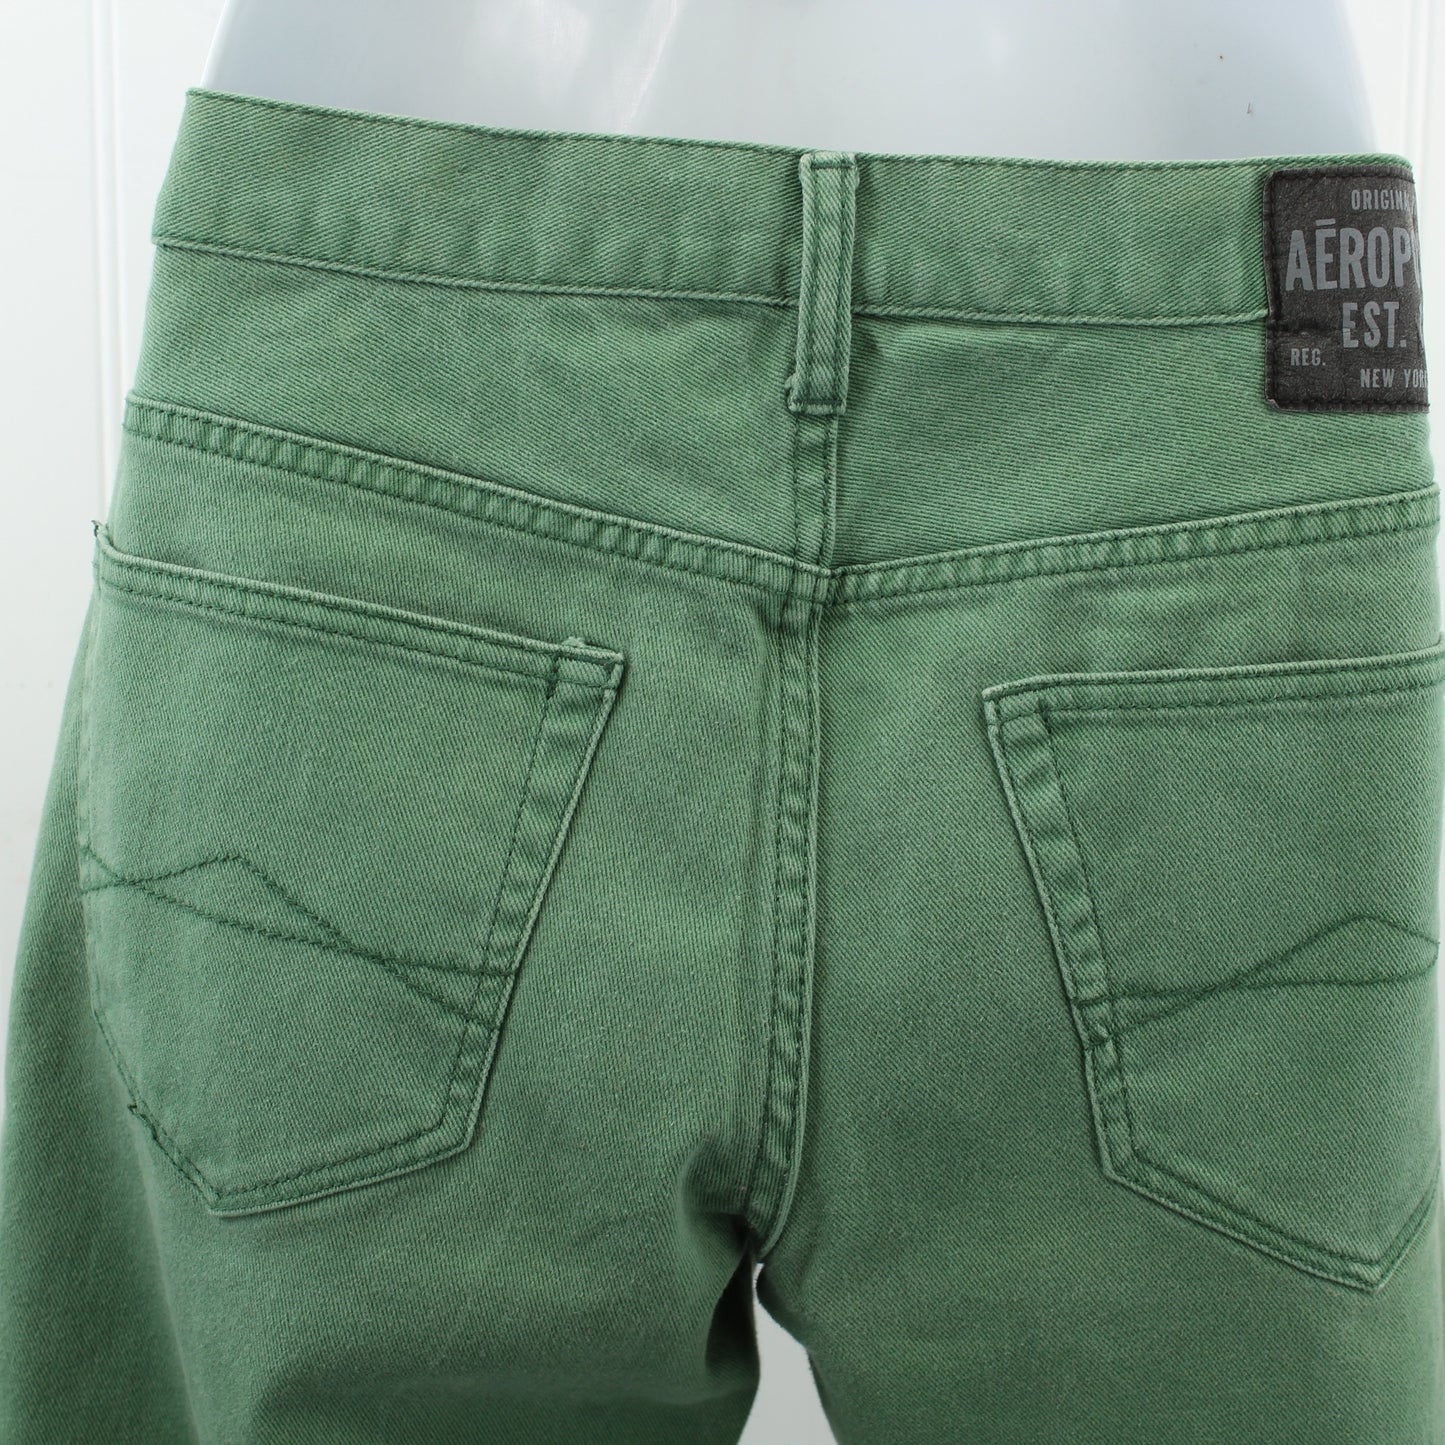 Aeropostale Bowery Vintage Slim Straight Jeans Green Cotton 98% Spandex 2% Size 32/34 5 pockets